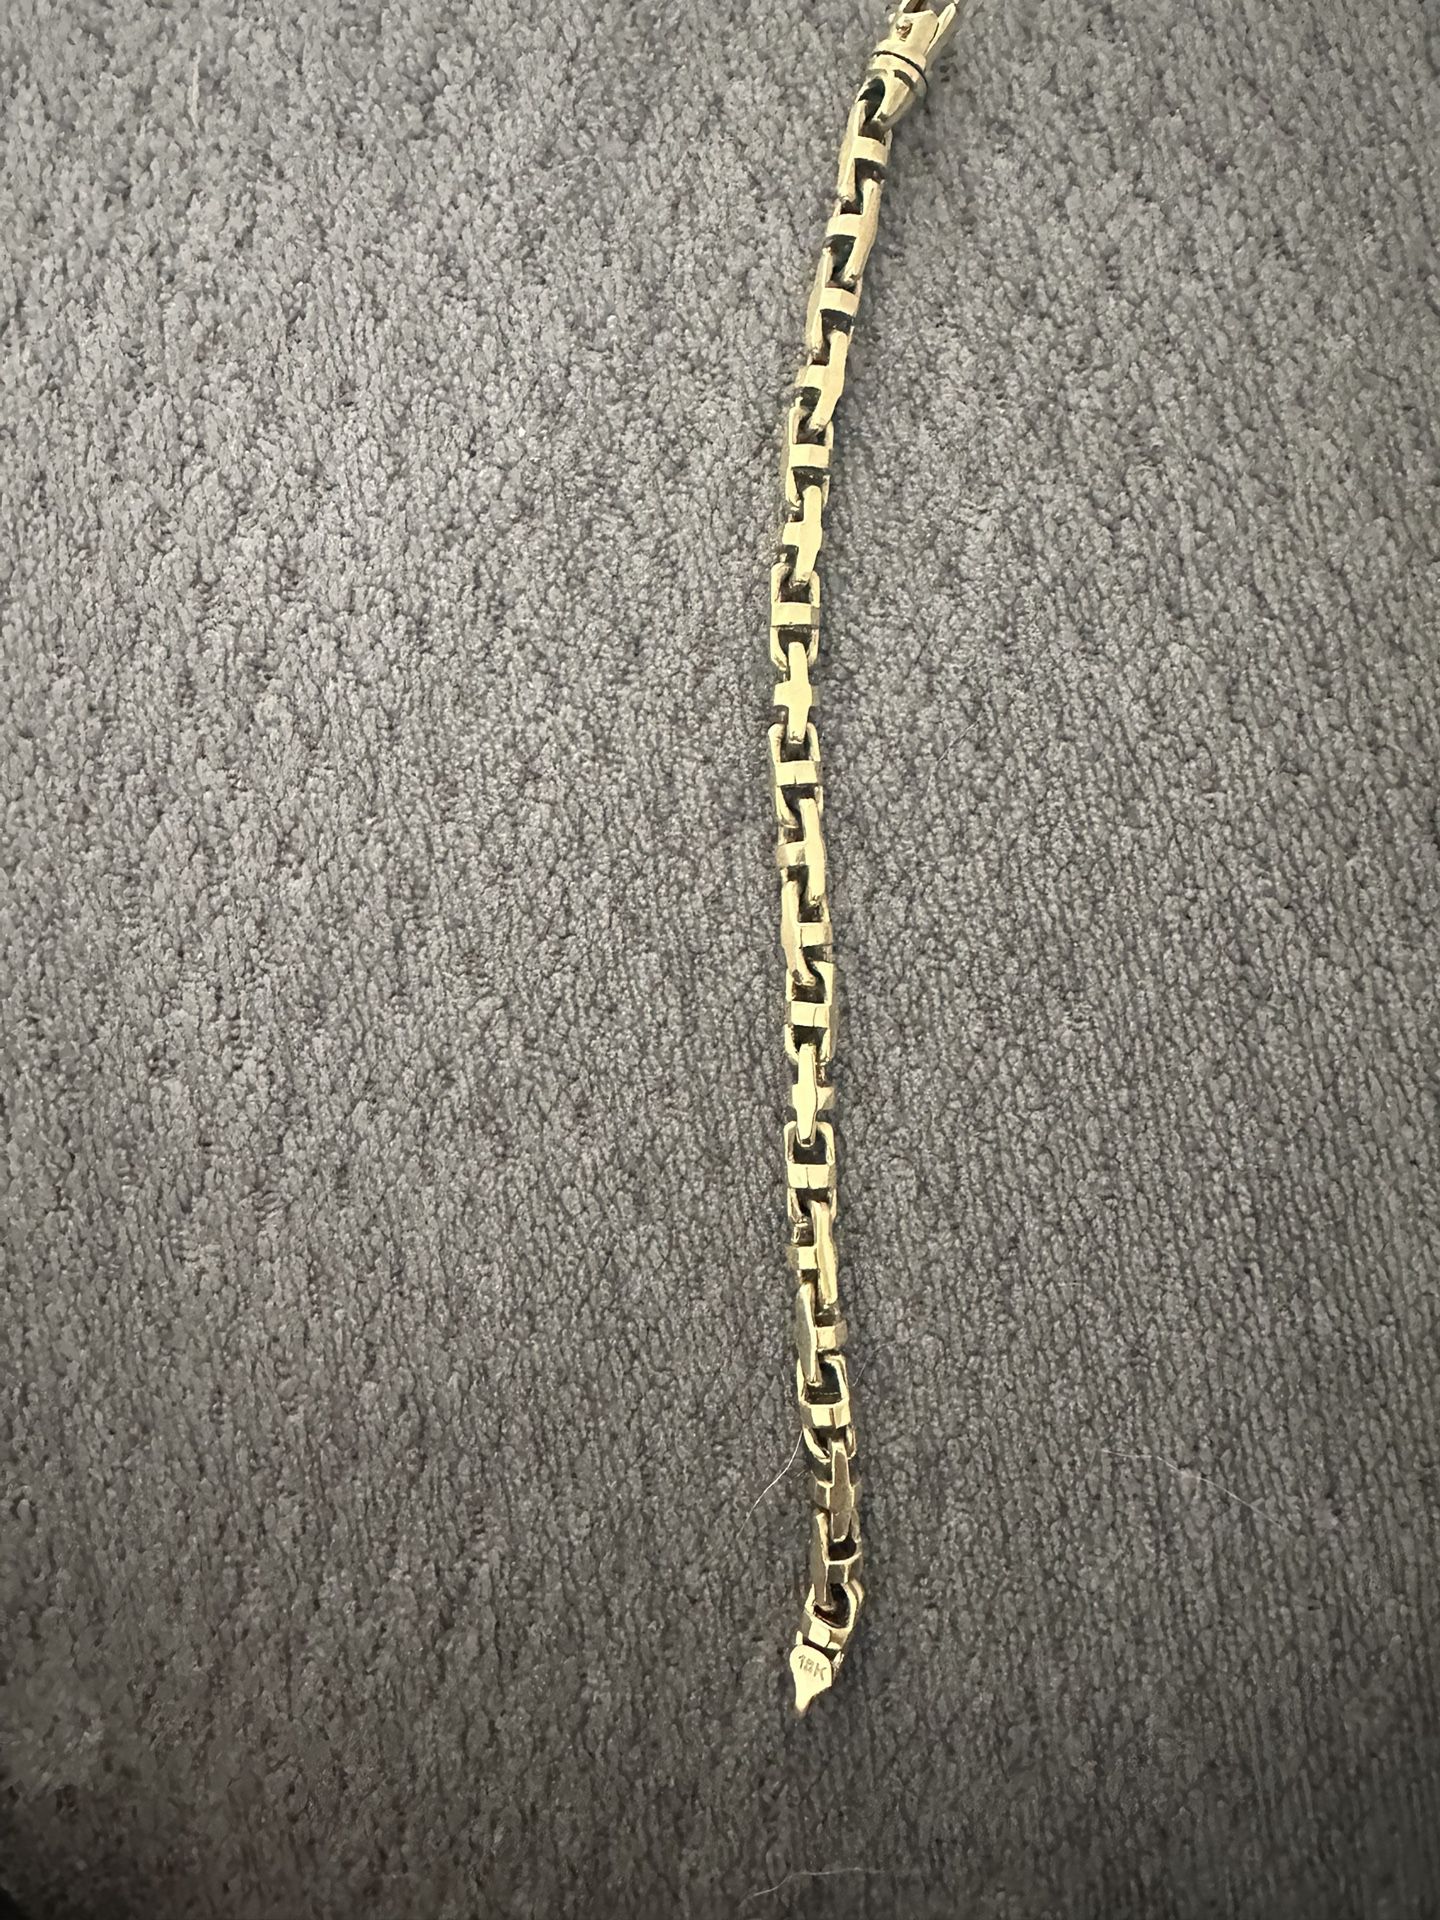 18k Yellow Gold Bracelet 